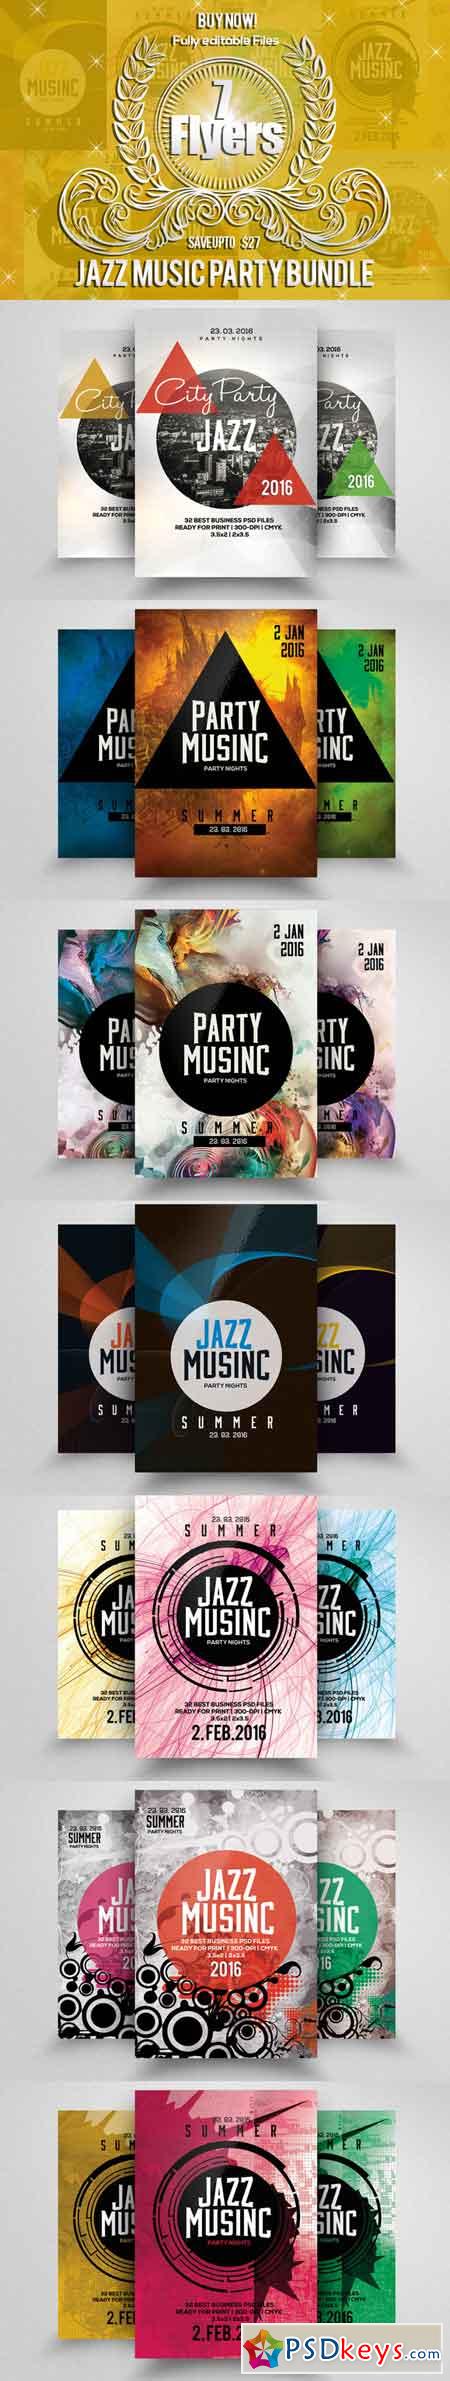 7 Jazz Music Party Flyer Bundle 625850